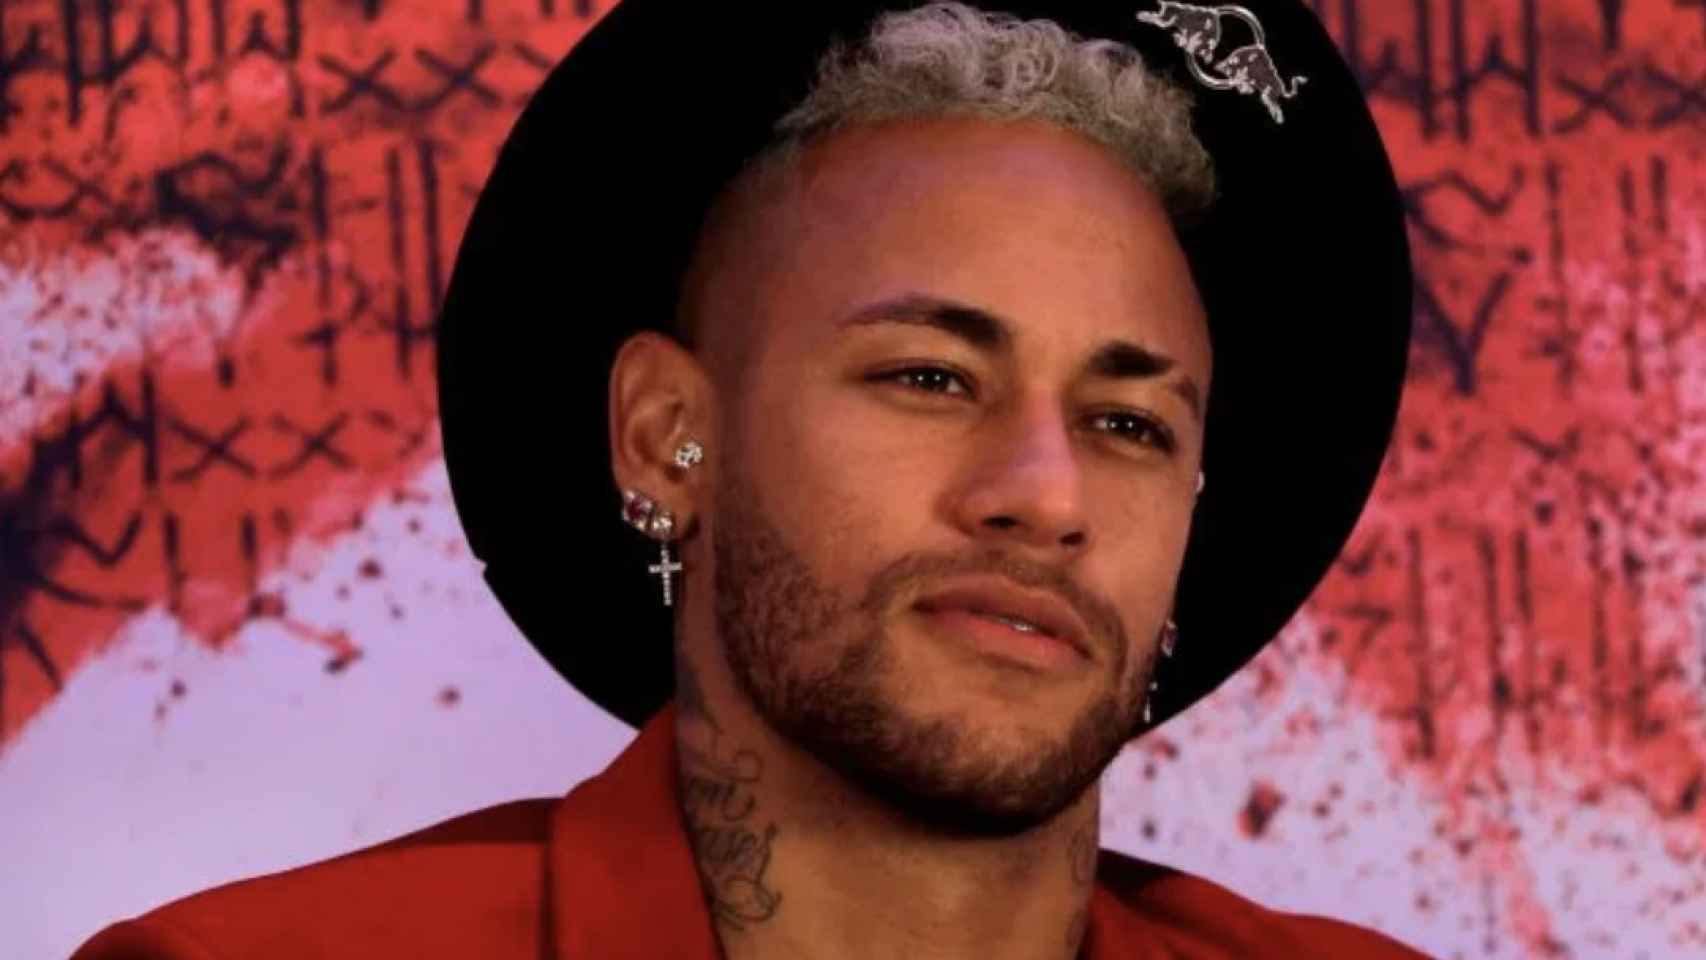 Una foto de Neymar Jr. durante una fiesta / Twitter